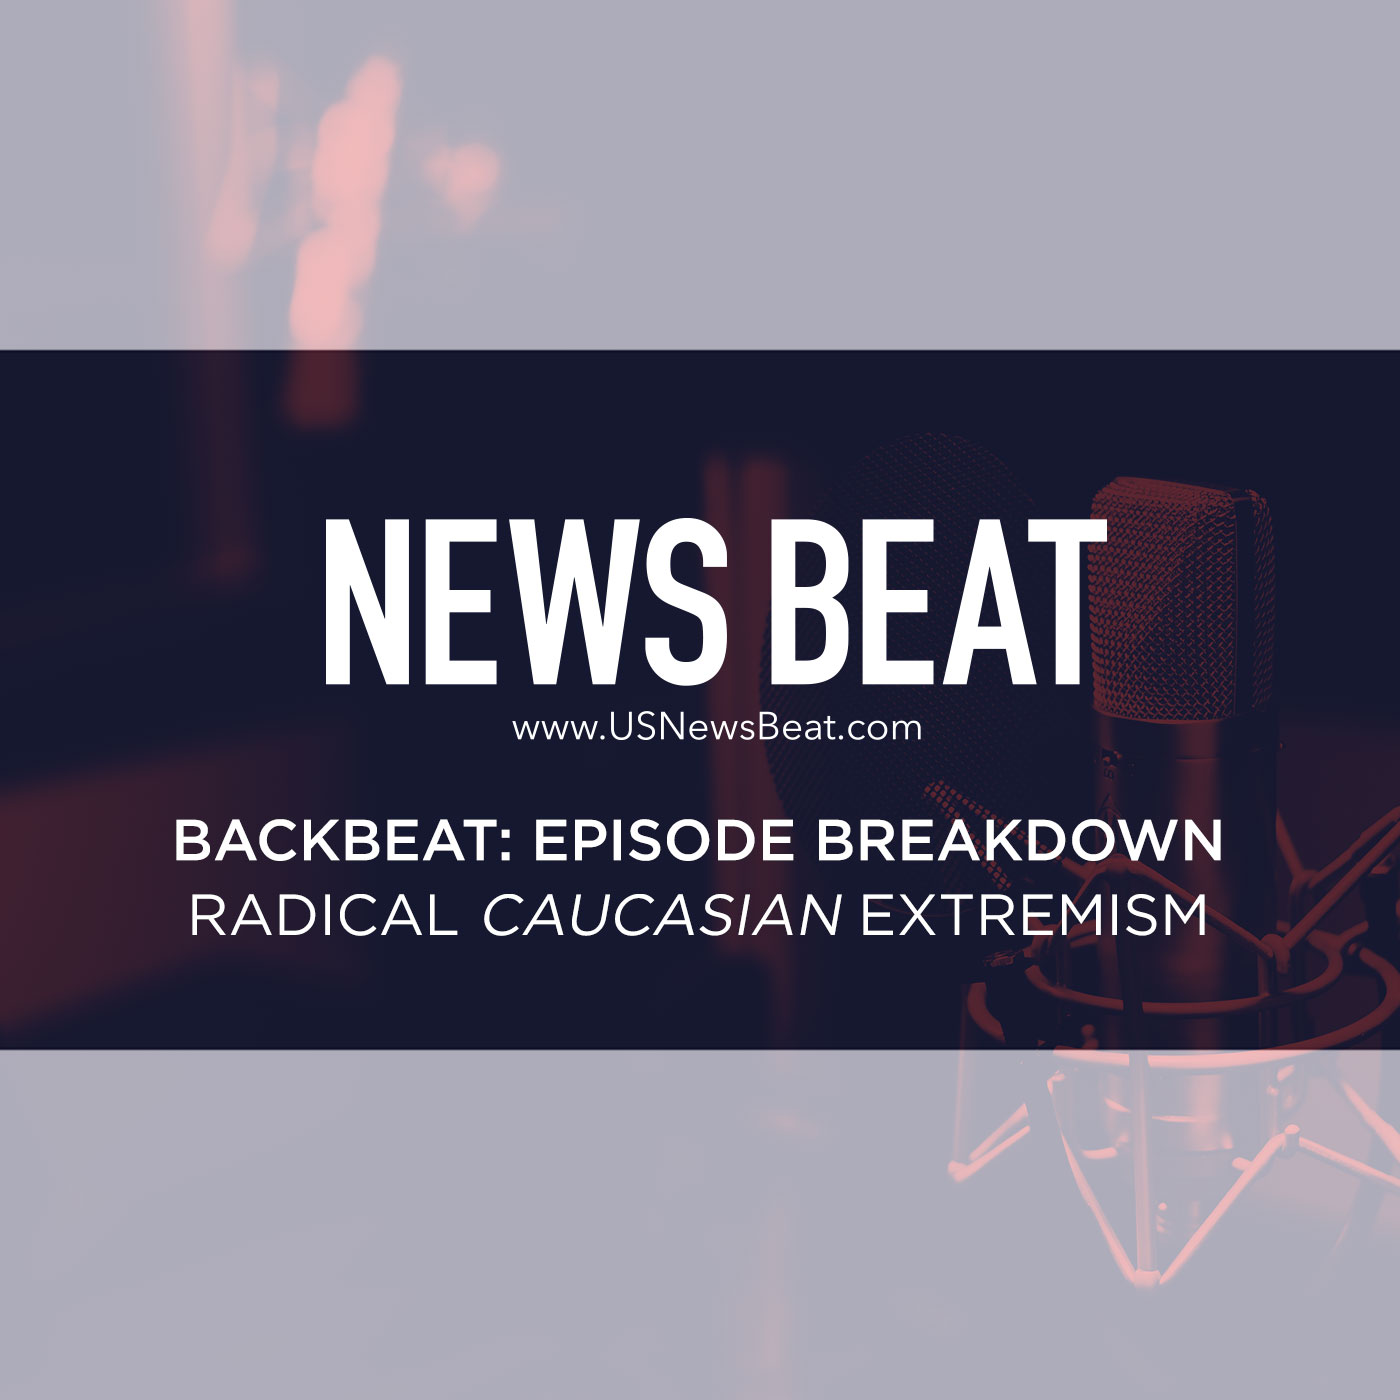 BackBeat: Episode breakdown - Radical Caucasian Extremism